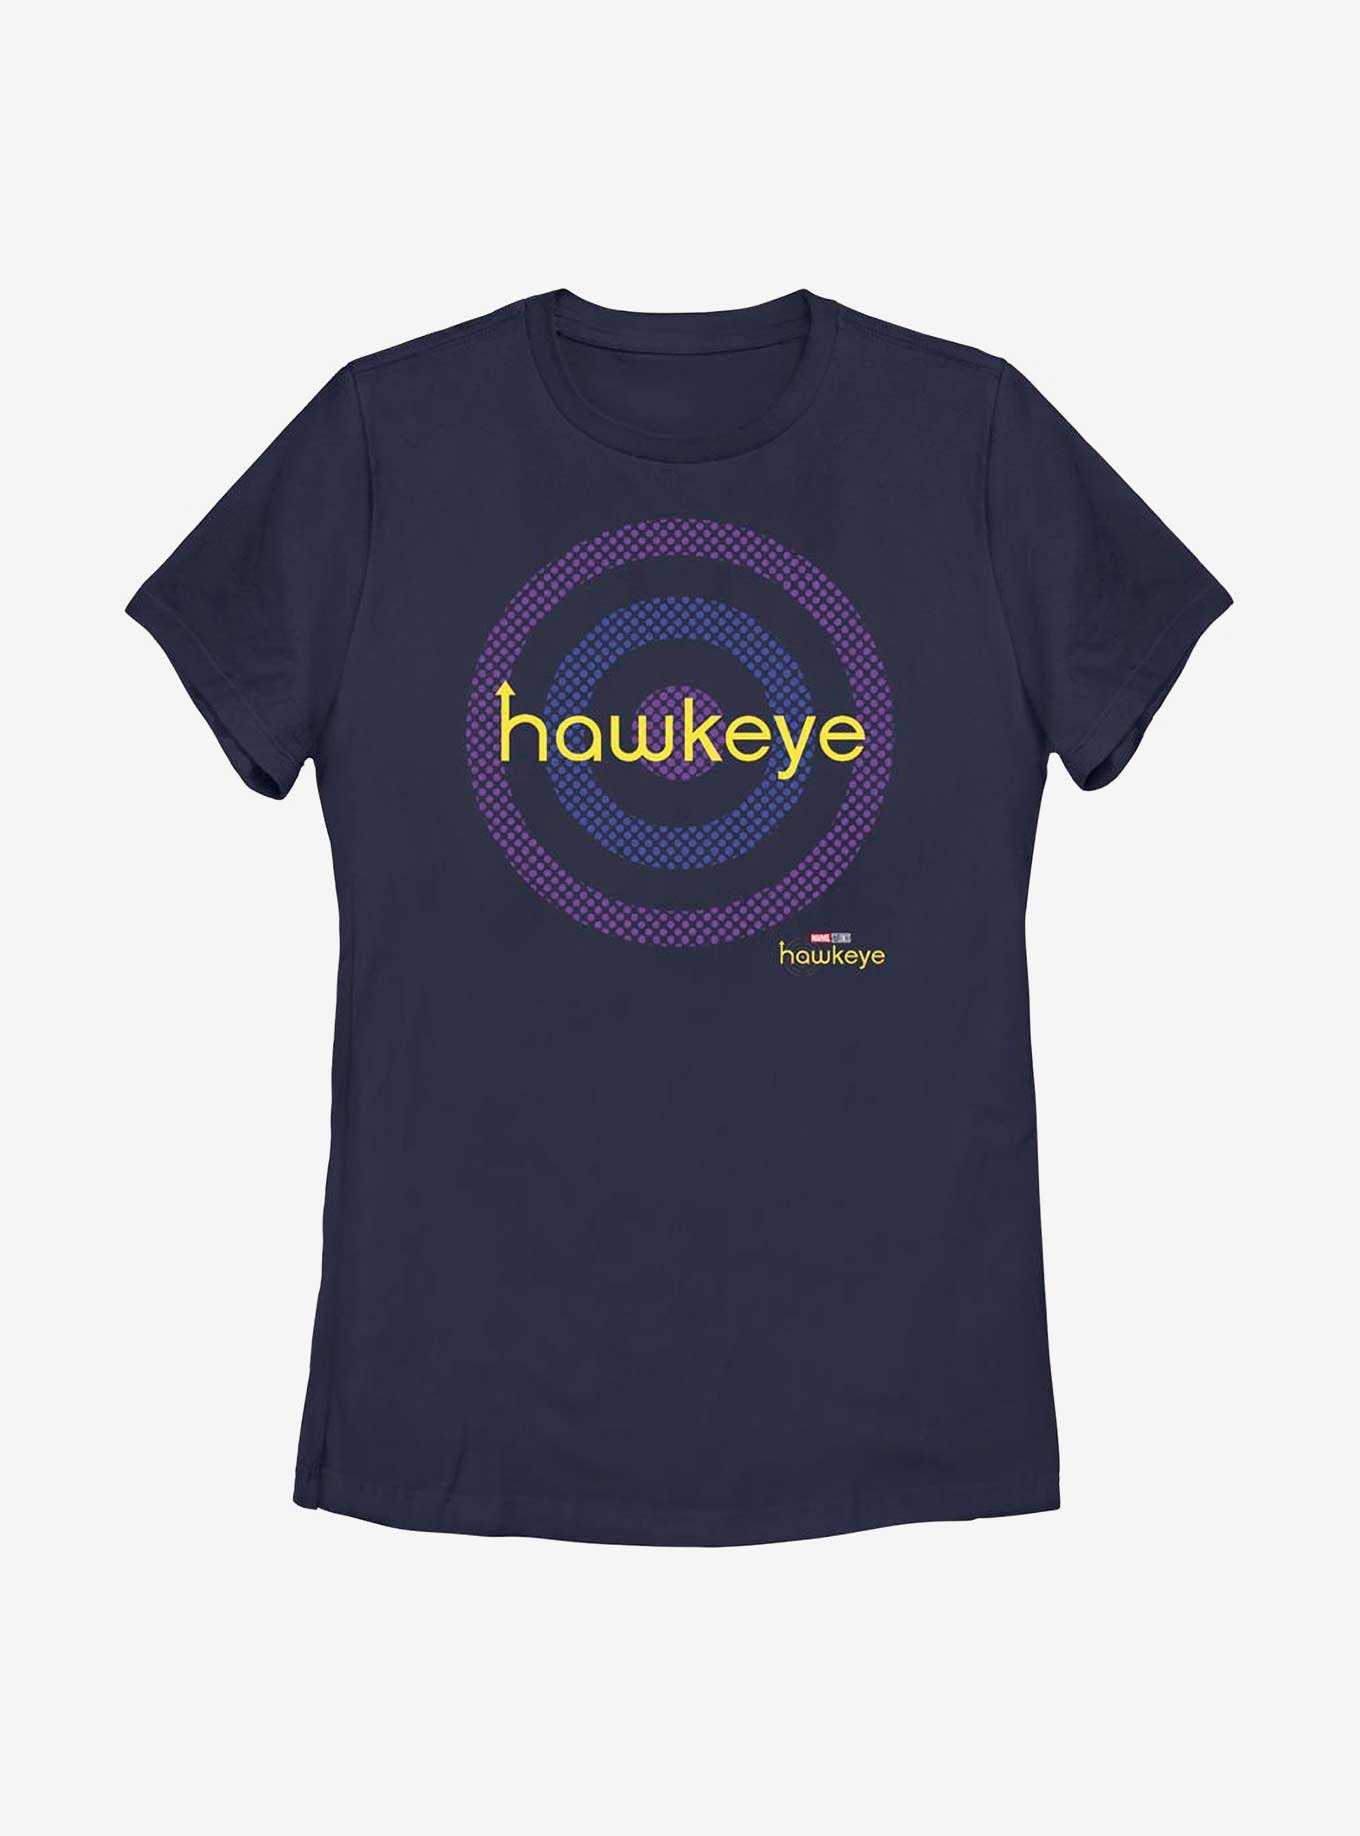 Marvel Hawkeye Bullseye Target Logo Womens T-Shirt, , hi-res